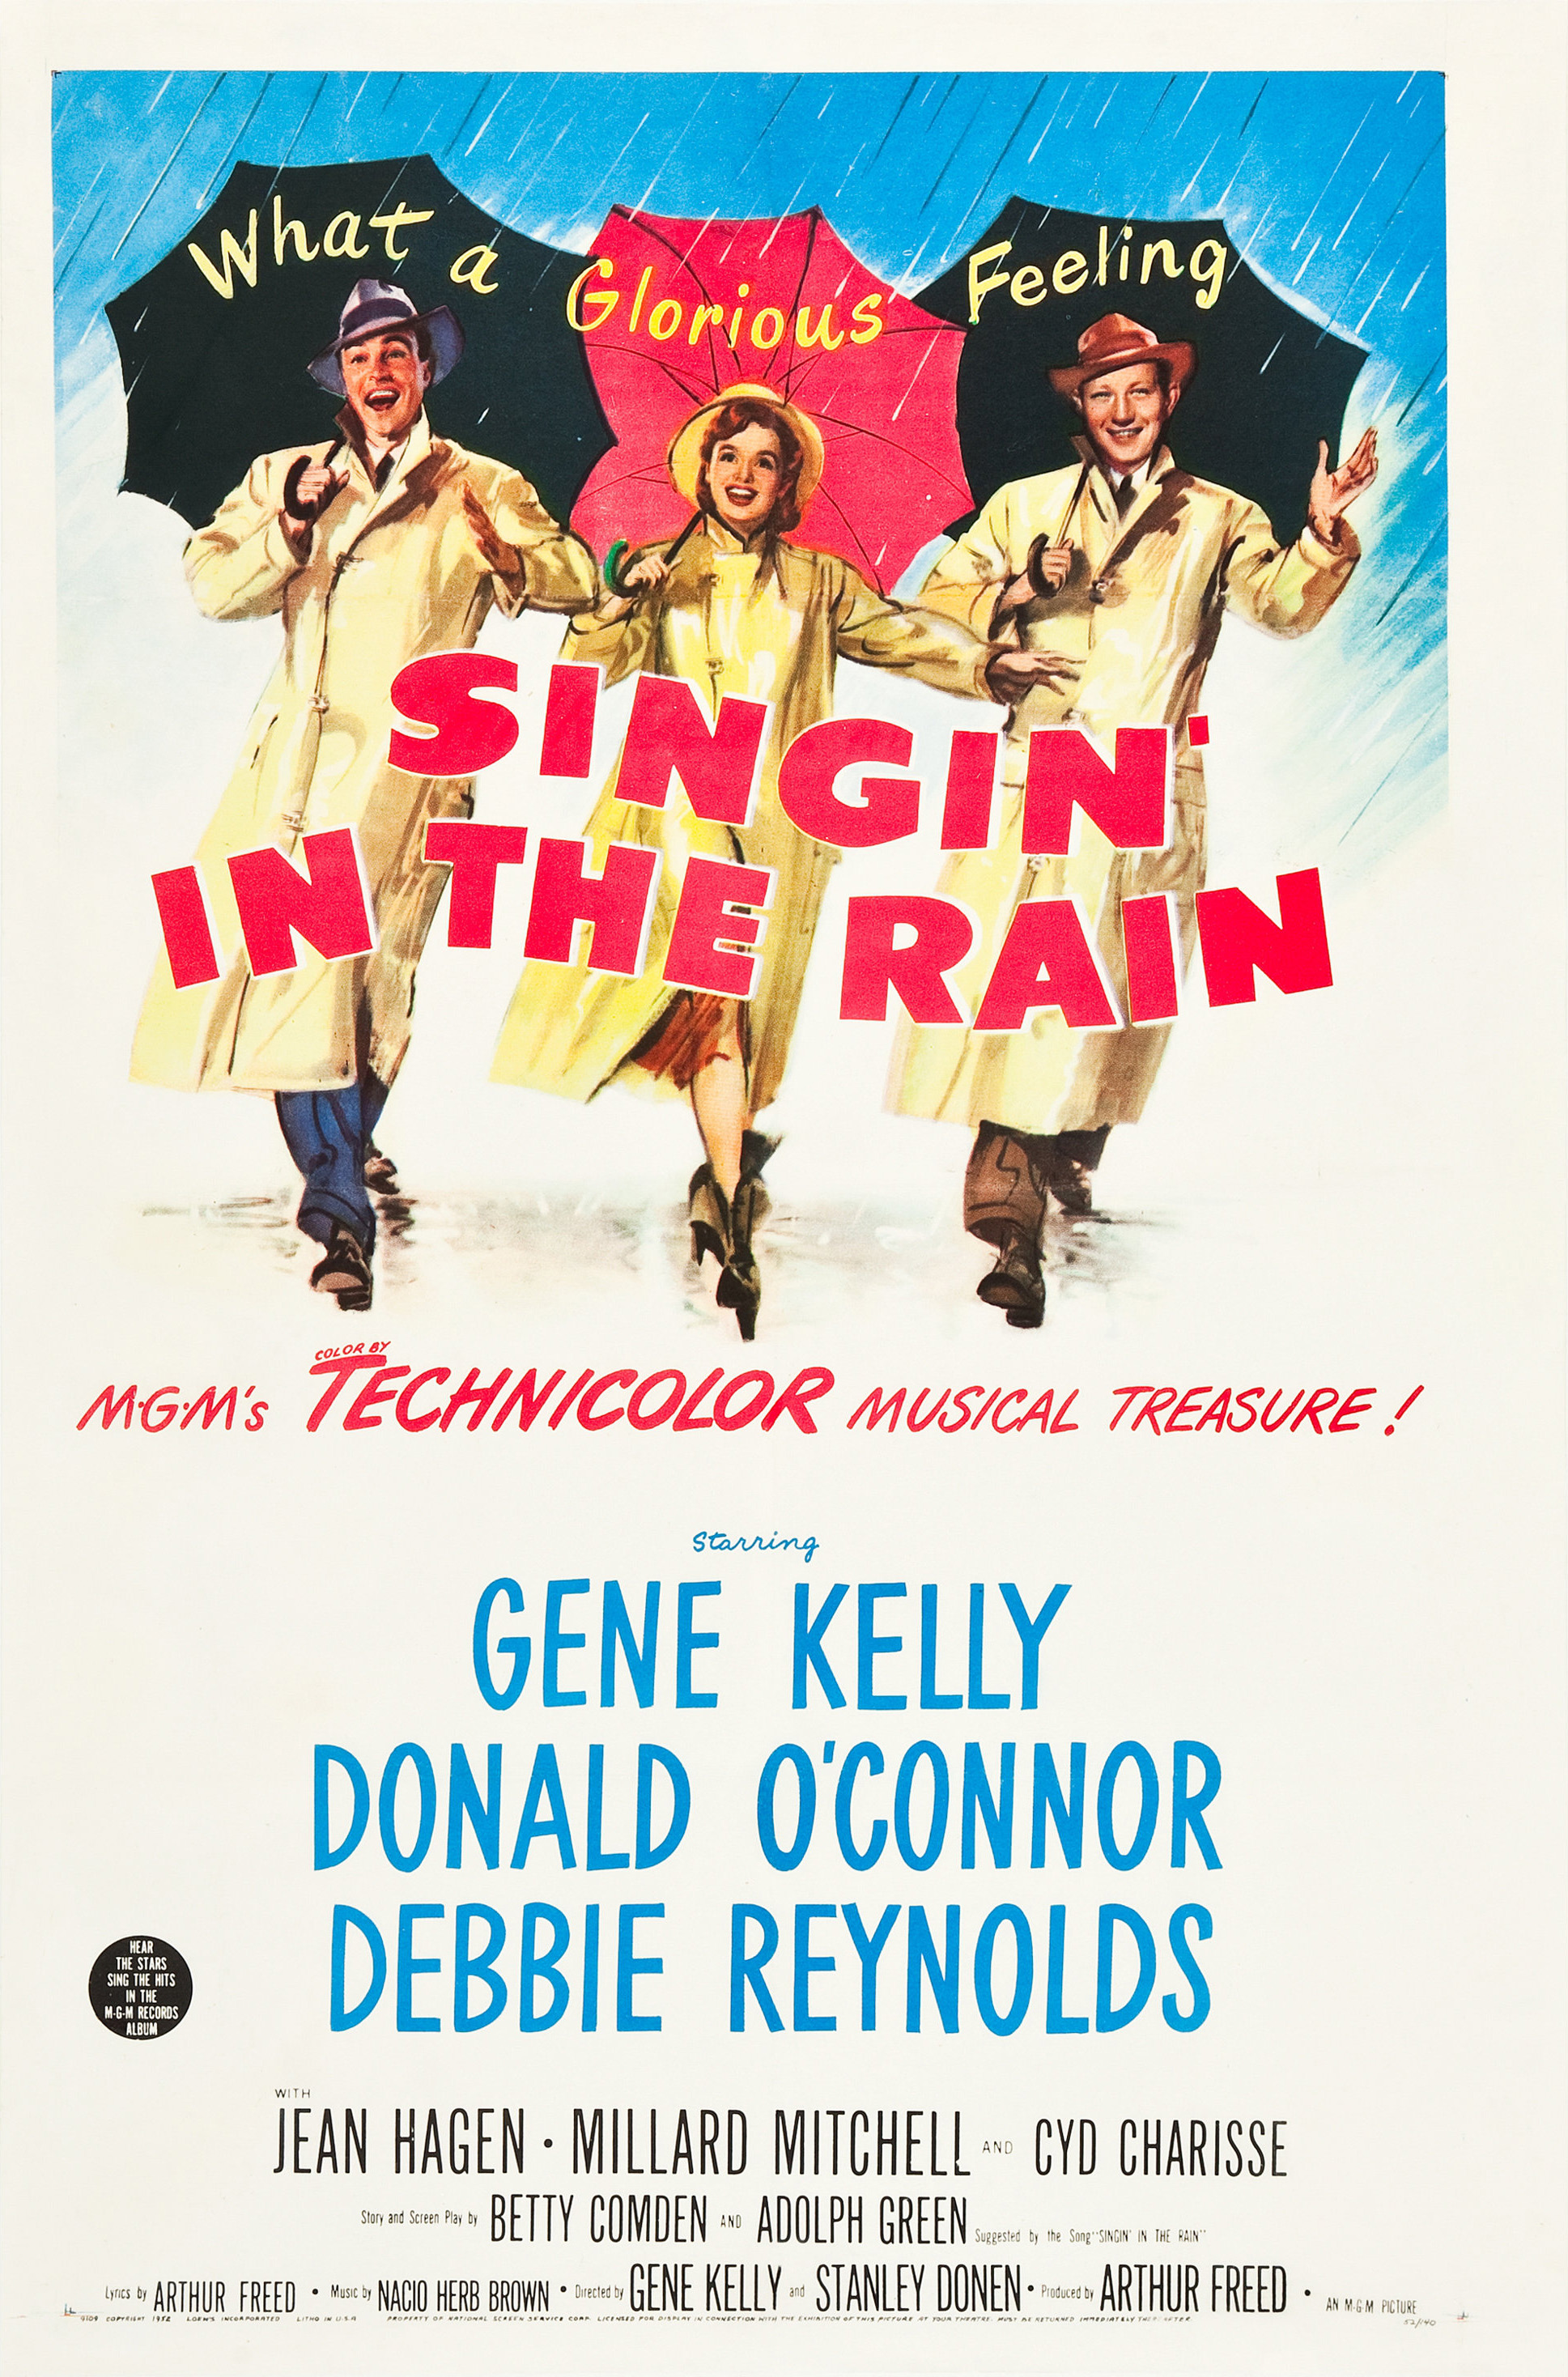 Cover Art for "Singin' in the Rain"